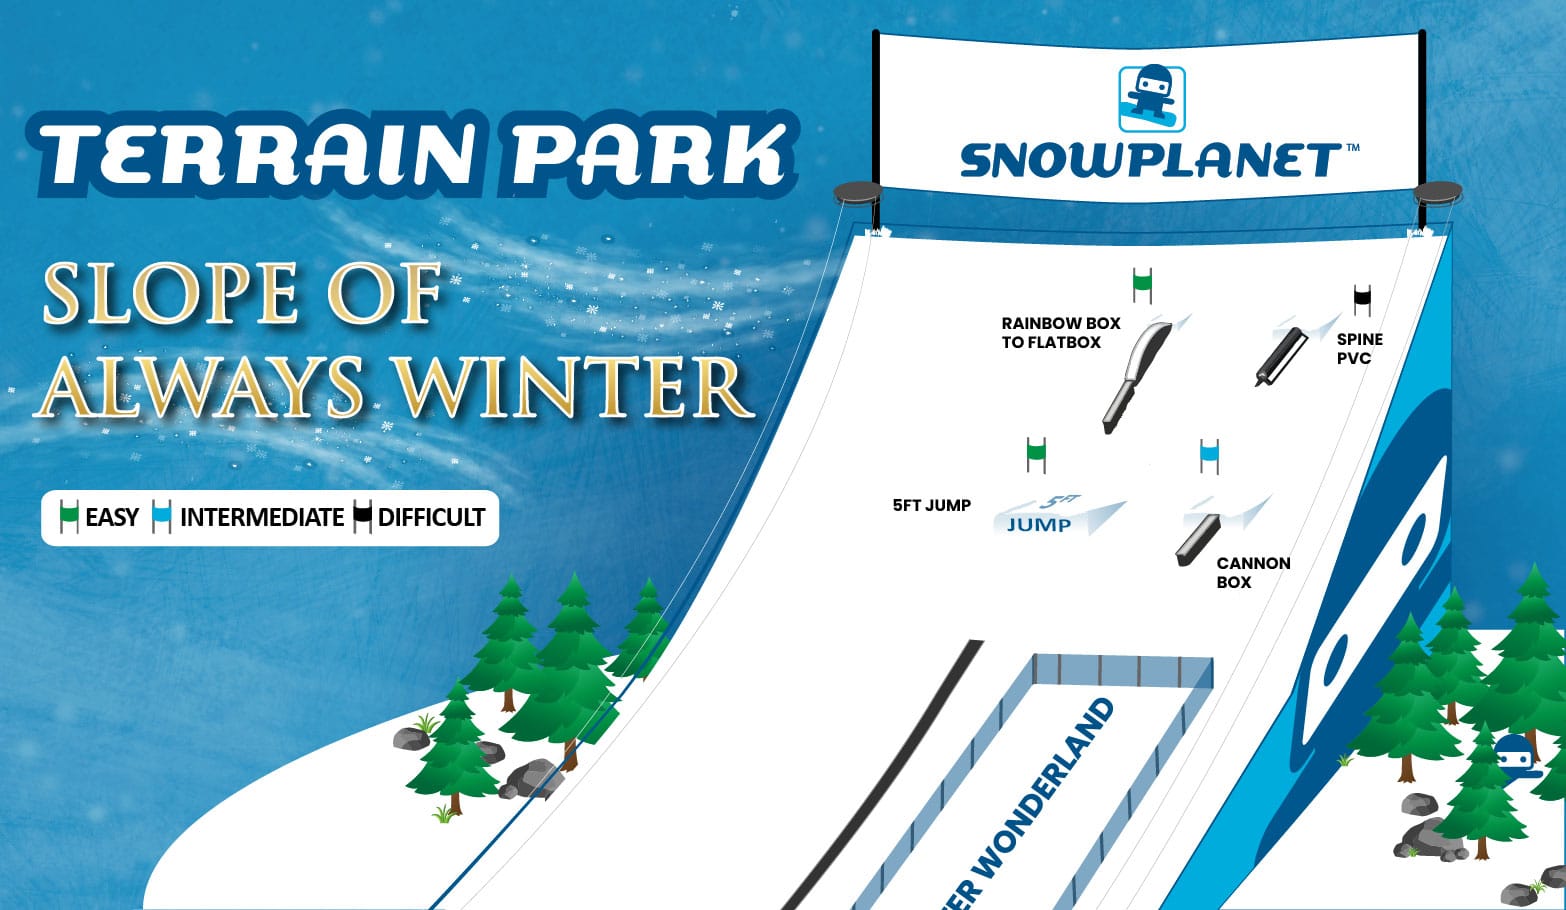 Terrain Park plan at Snowplanet